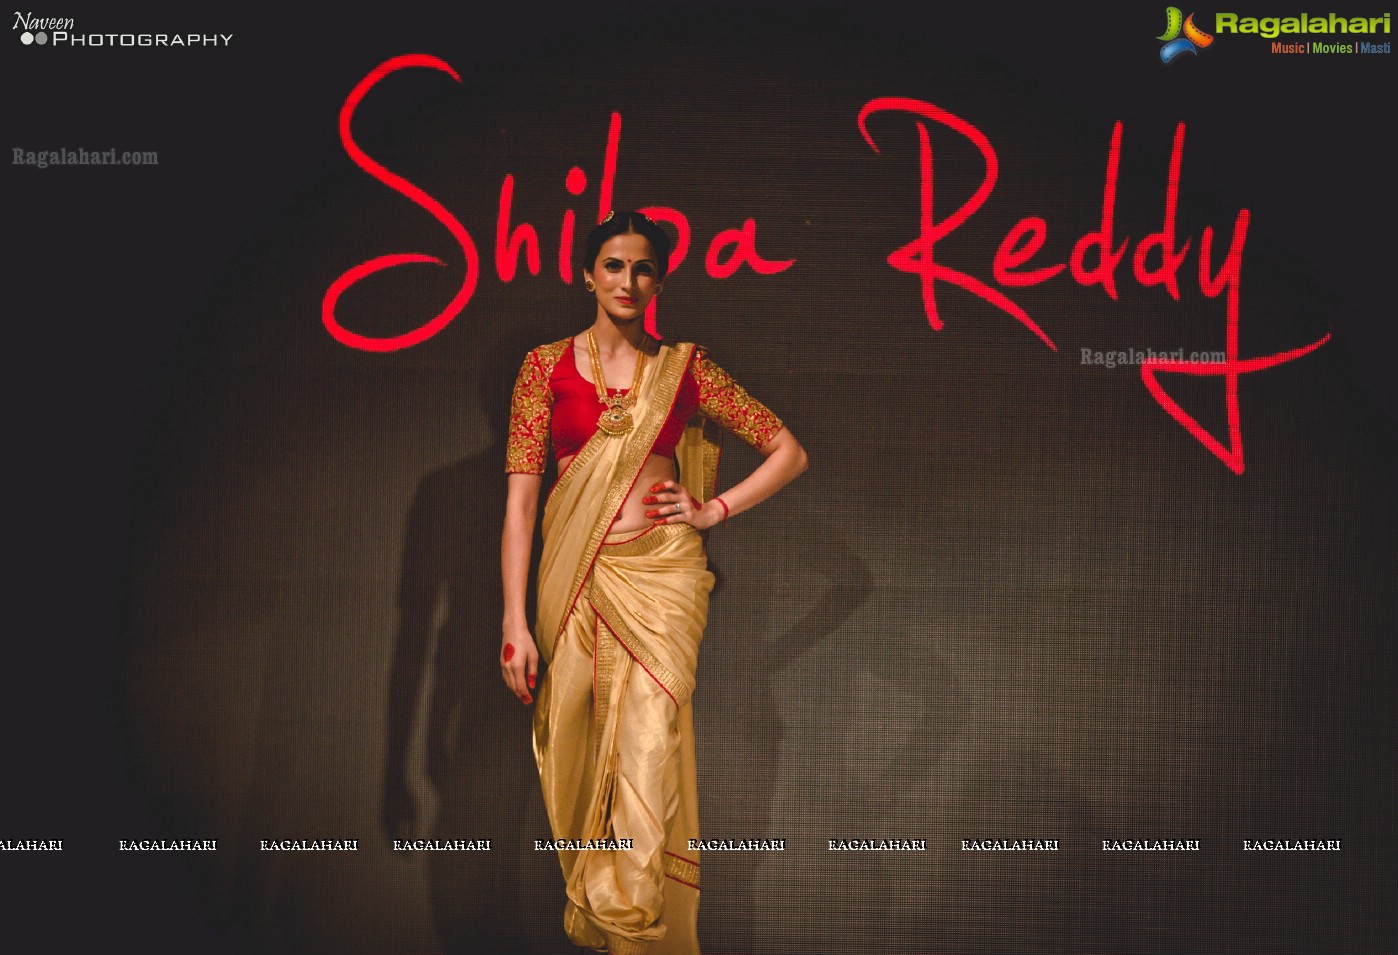 Shilpa Reddy (Posters)